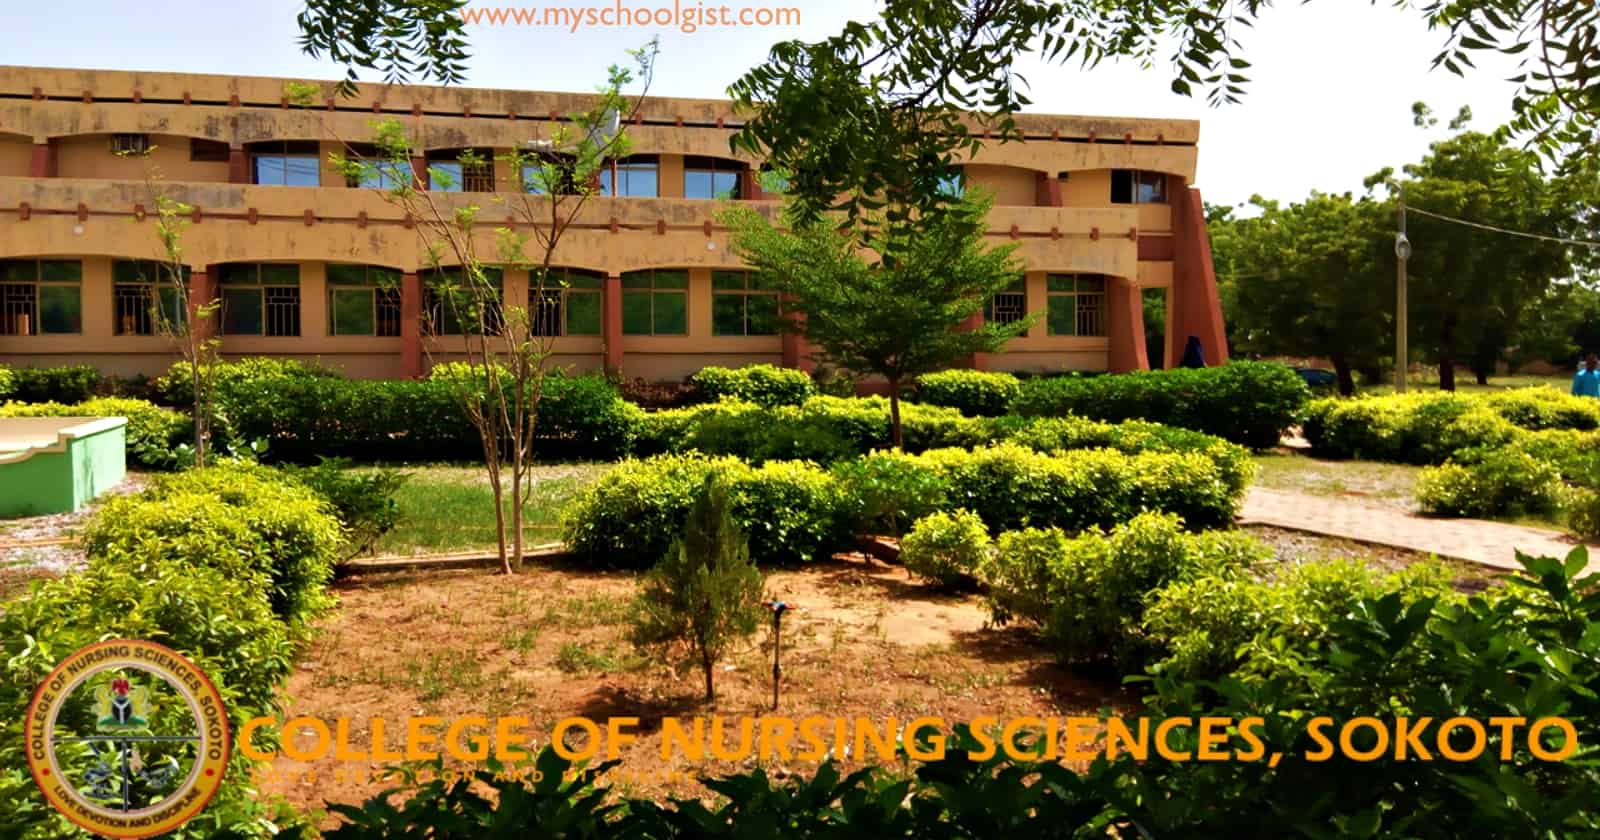 College of Nursing Sciences Sokoto Post UTME Form for ND/HND Nursing Programme